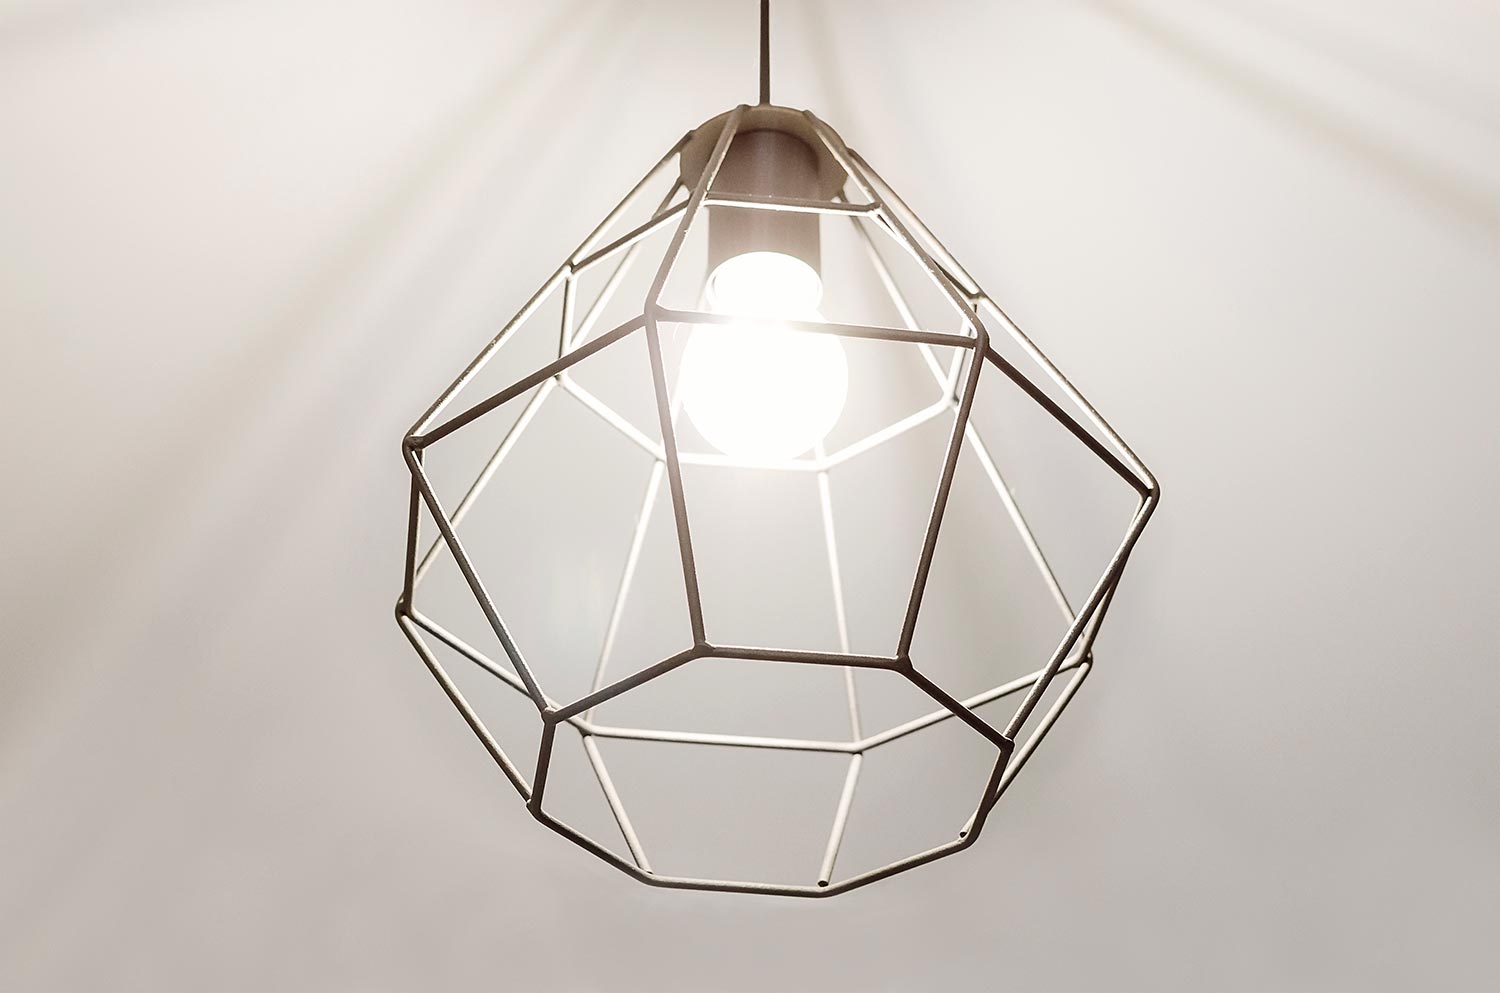 Contemporary pendant light made of metal